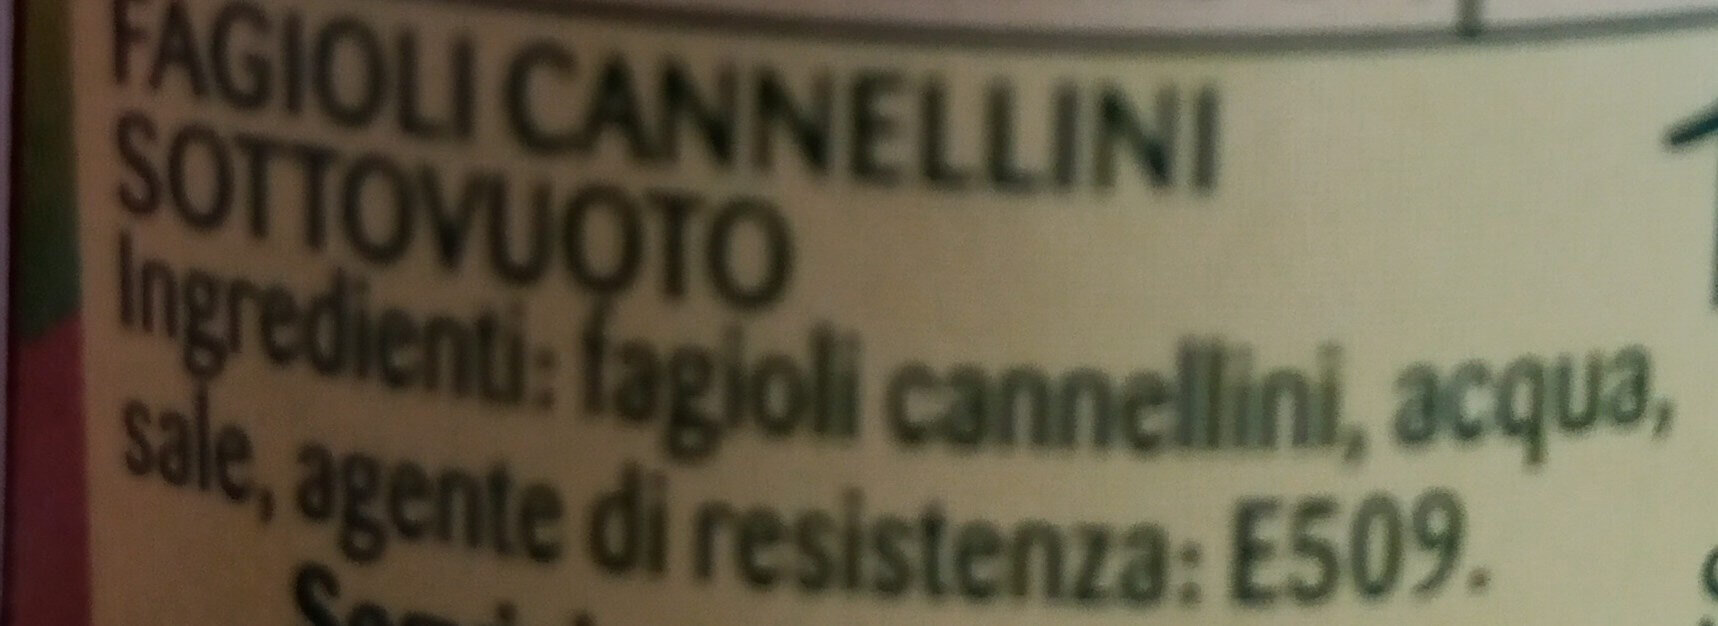 Cannellini al vapore - Ingredients - it